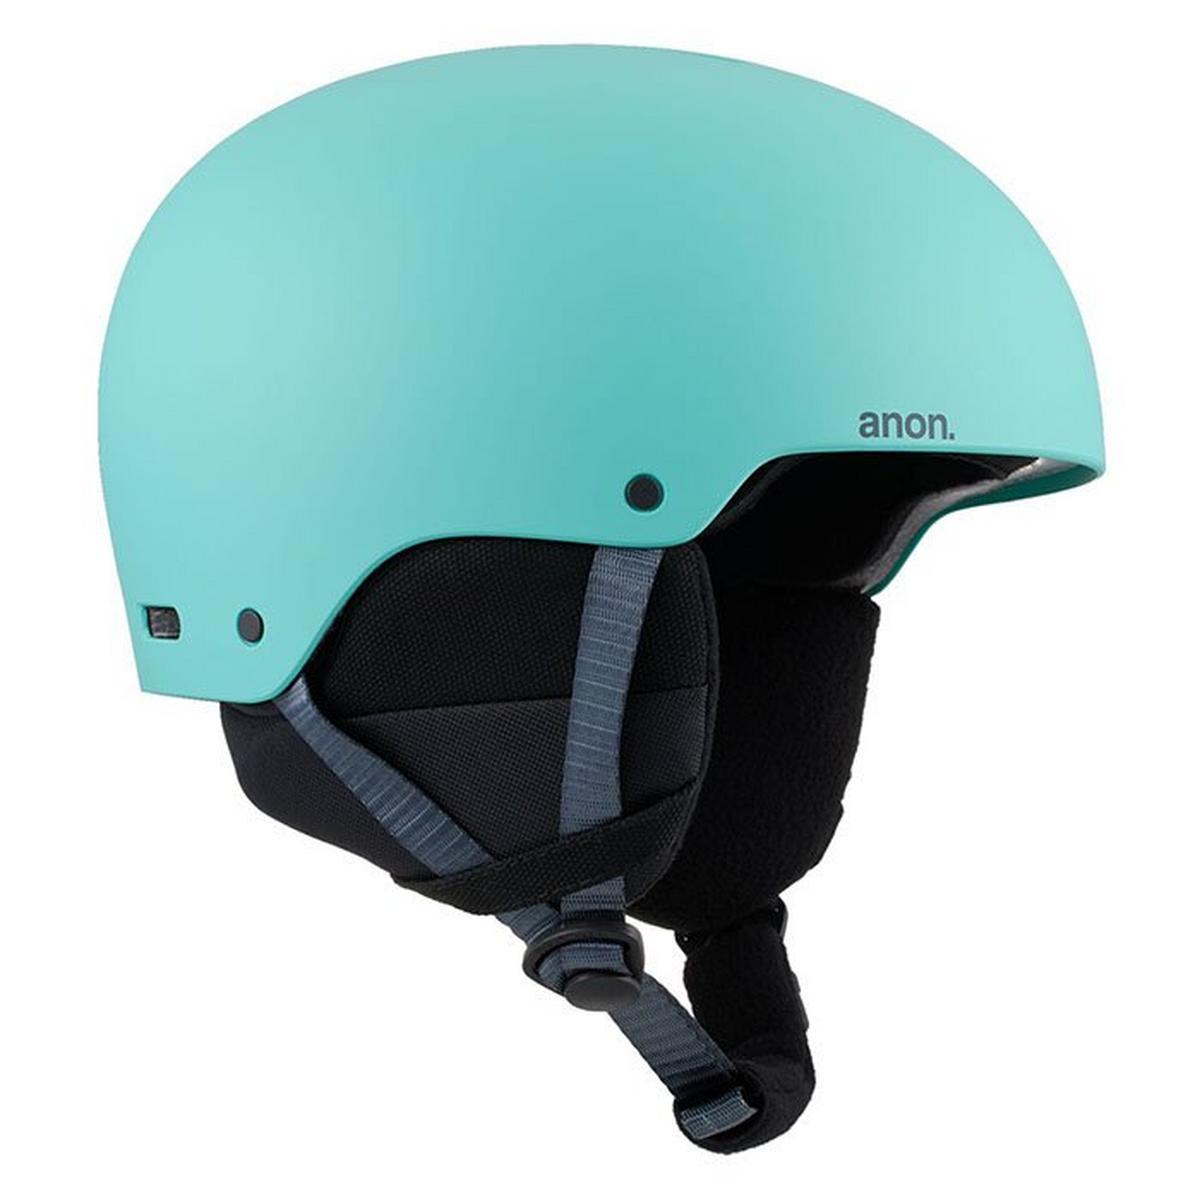 Juniors' Rime 3 Multi-Season Helmet